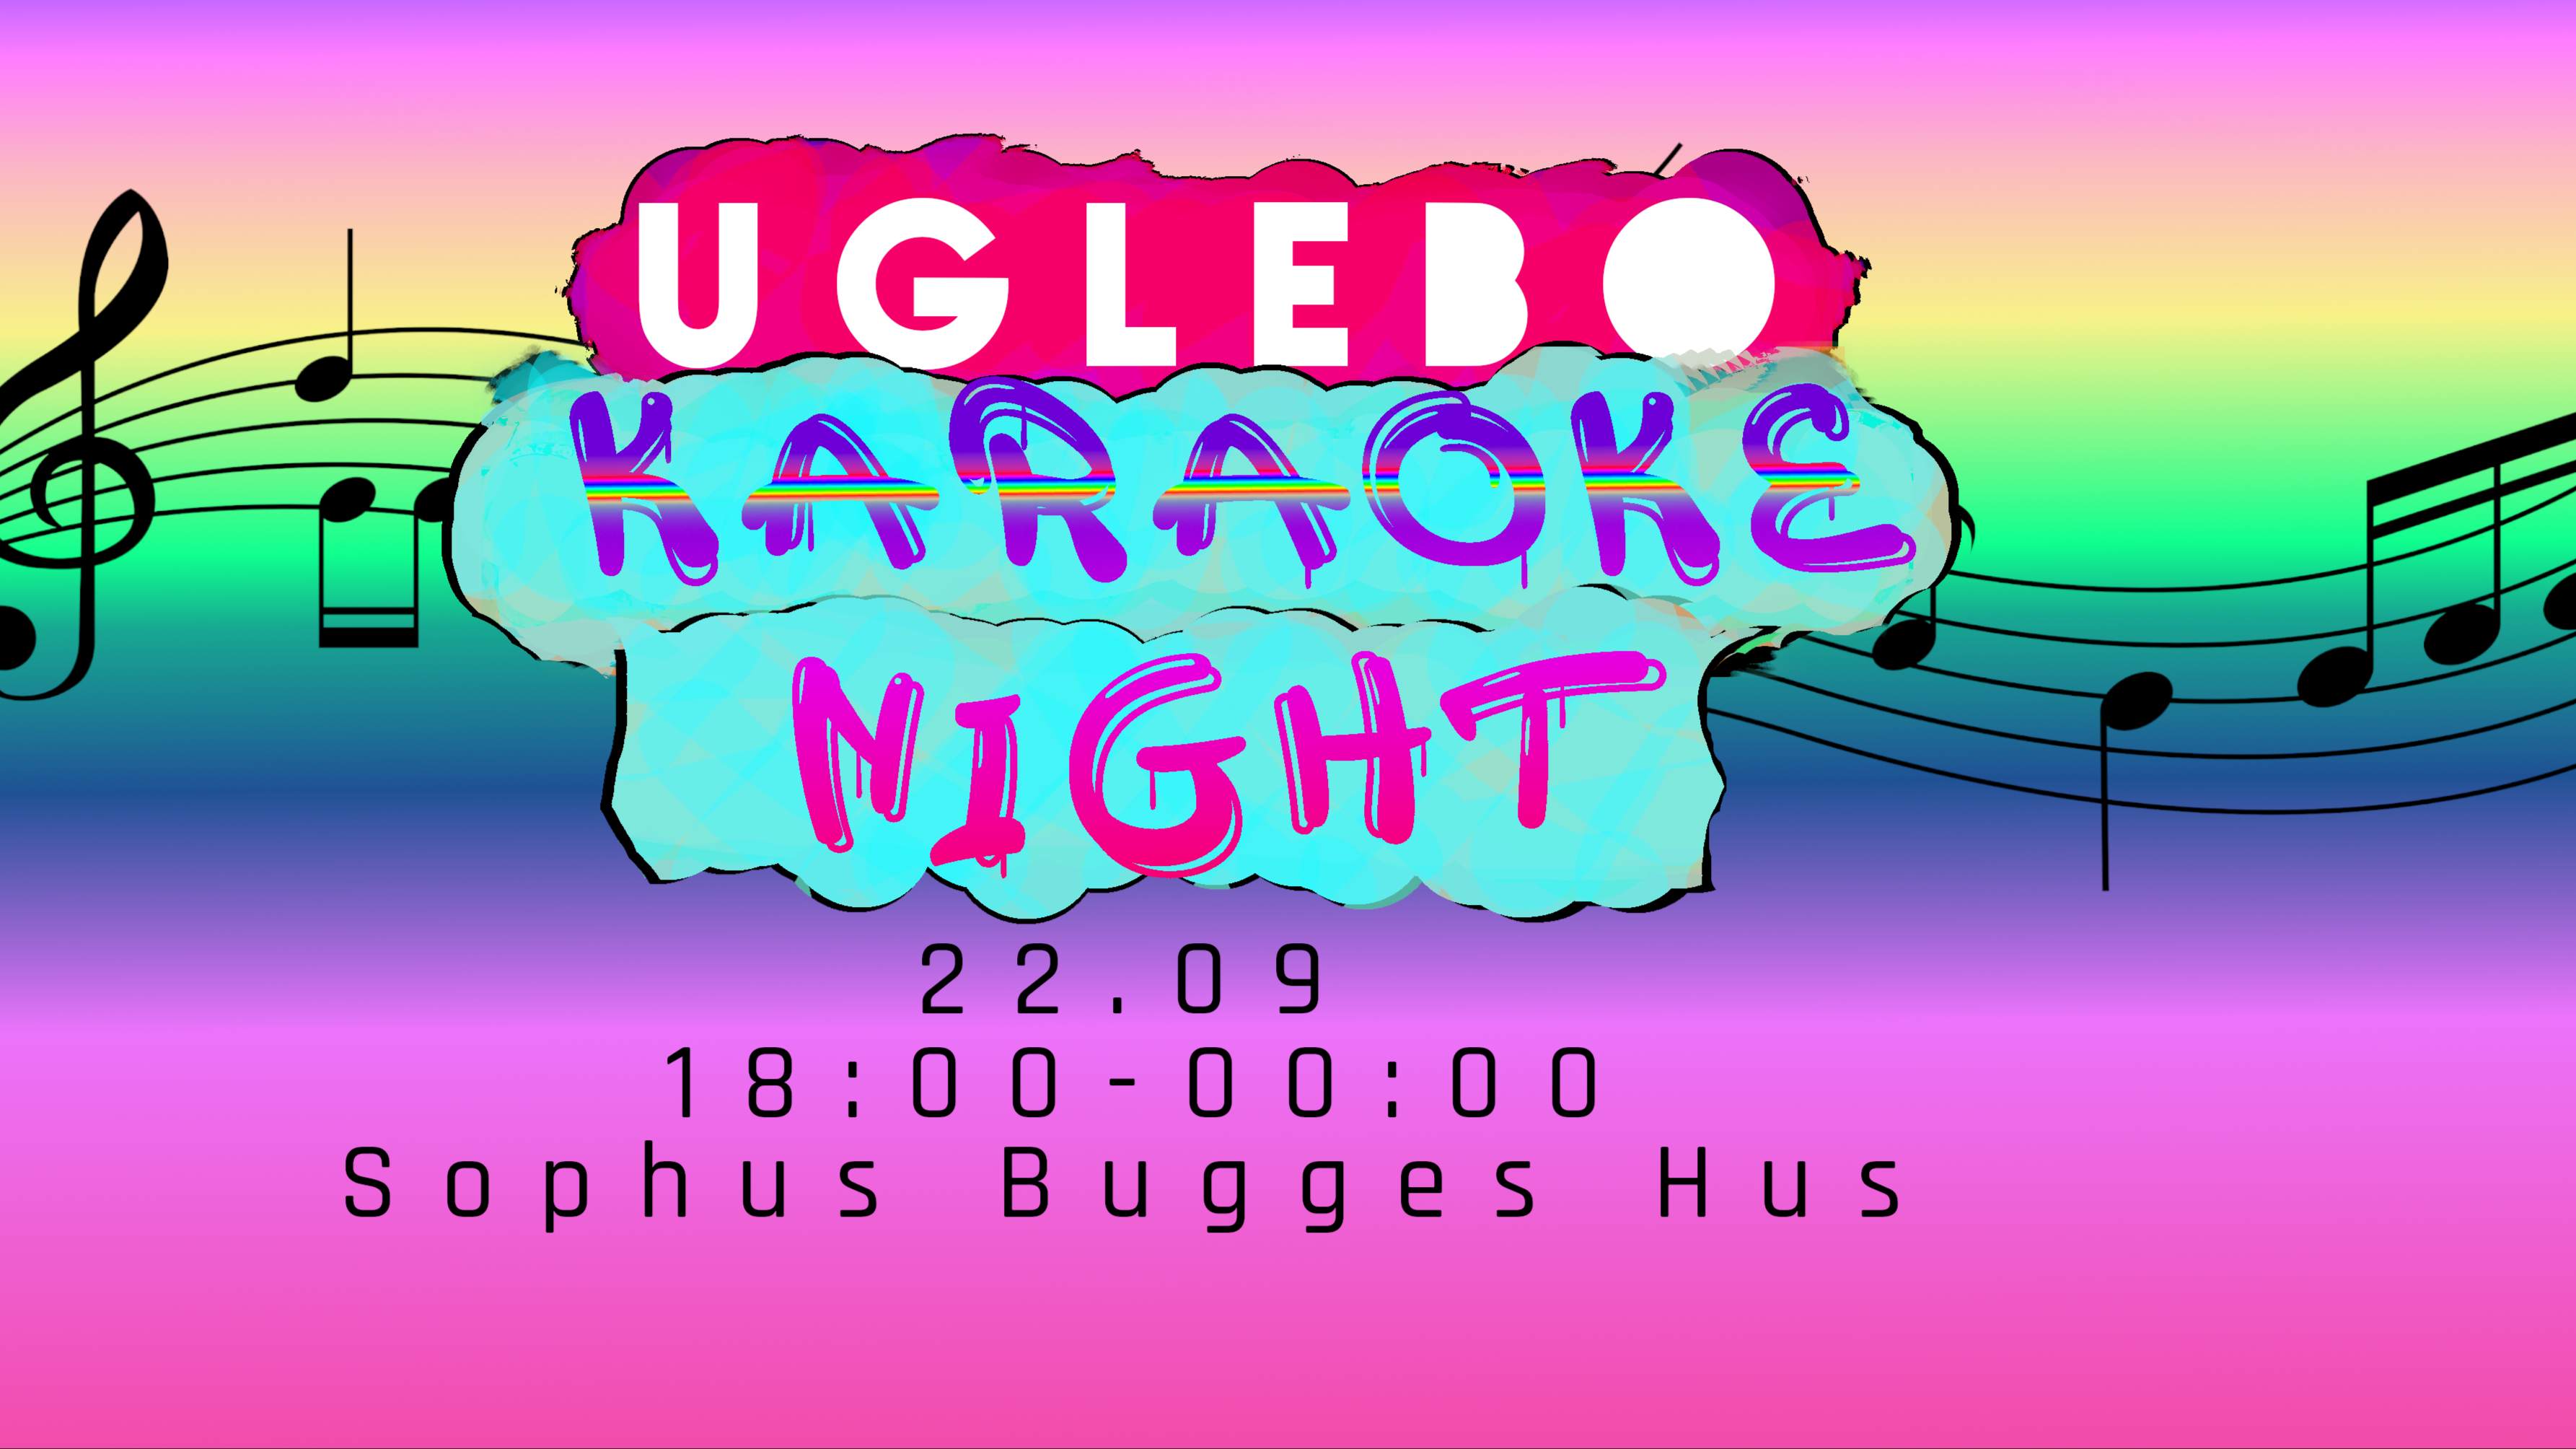 Uglebo Karaoke Night. 22.09. 18:00-00:00. Sophus Bugges Hus